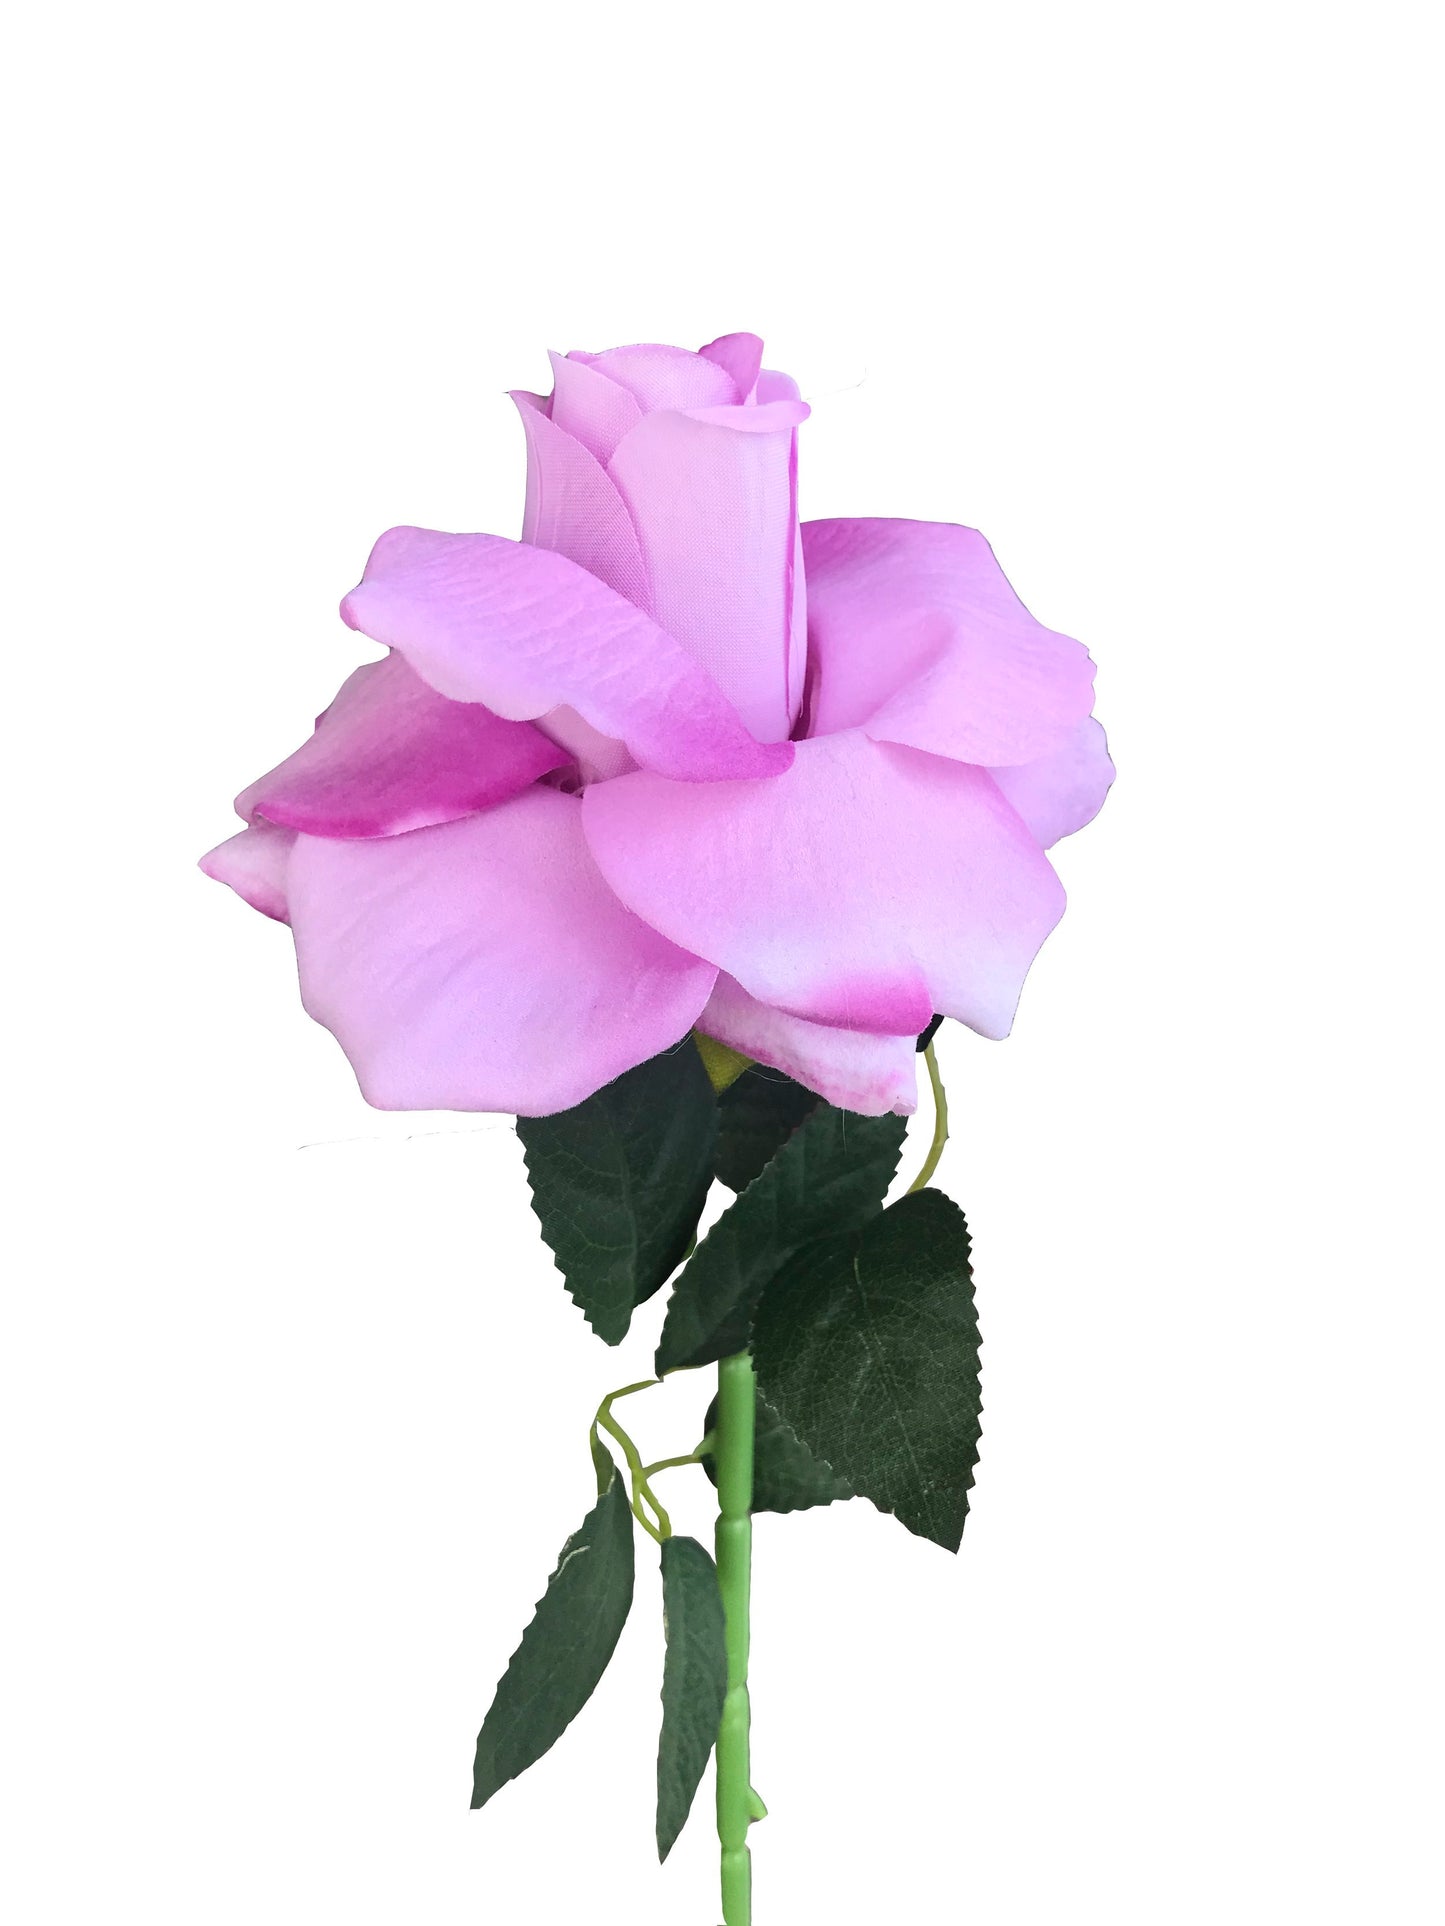 artificial velvet rose lilac